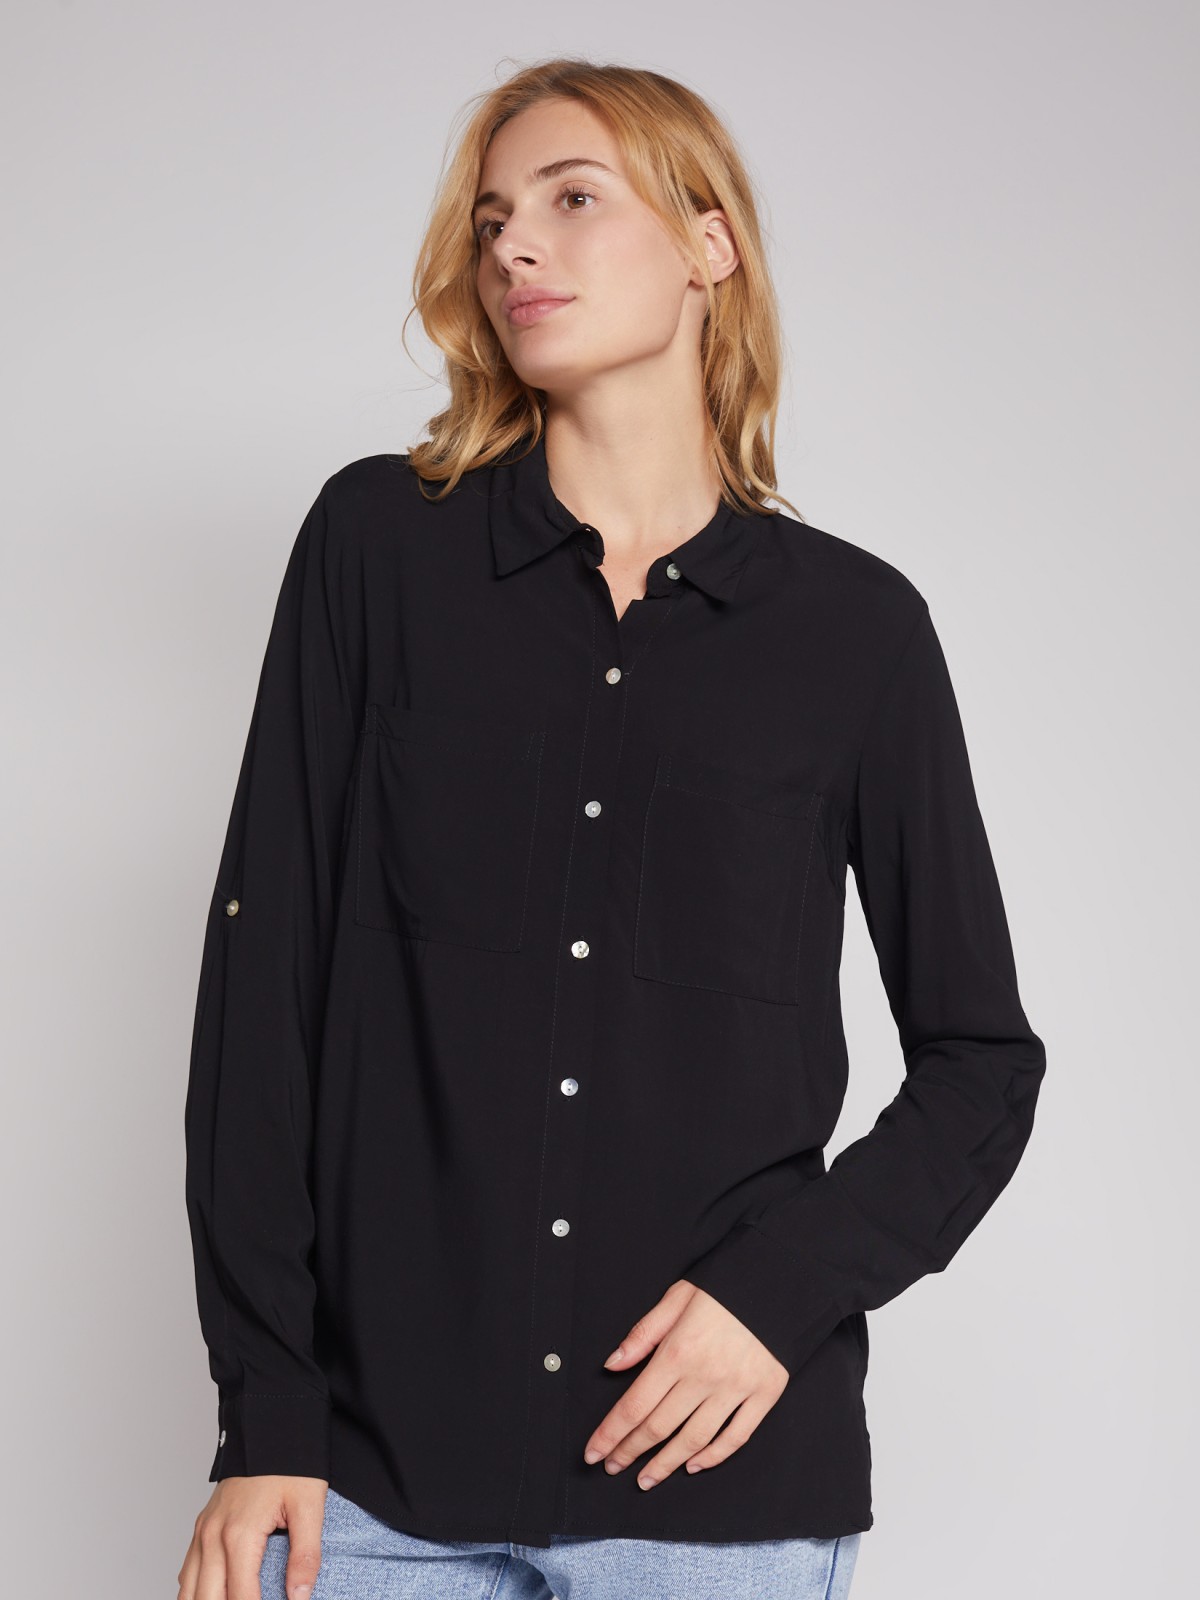 Рубашка с подхватами на рукавах zolla 022311162172, цвет черный, размер XS - фото 3